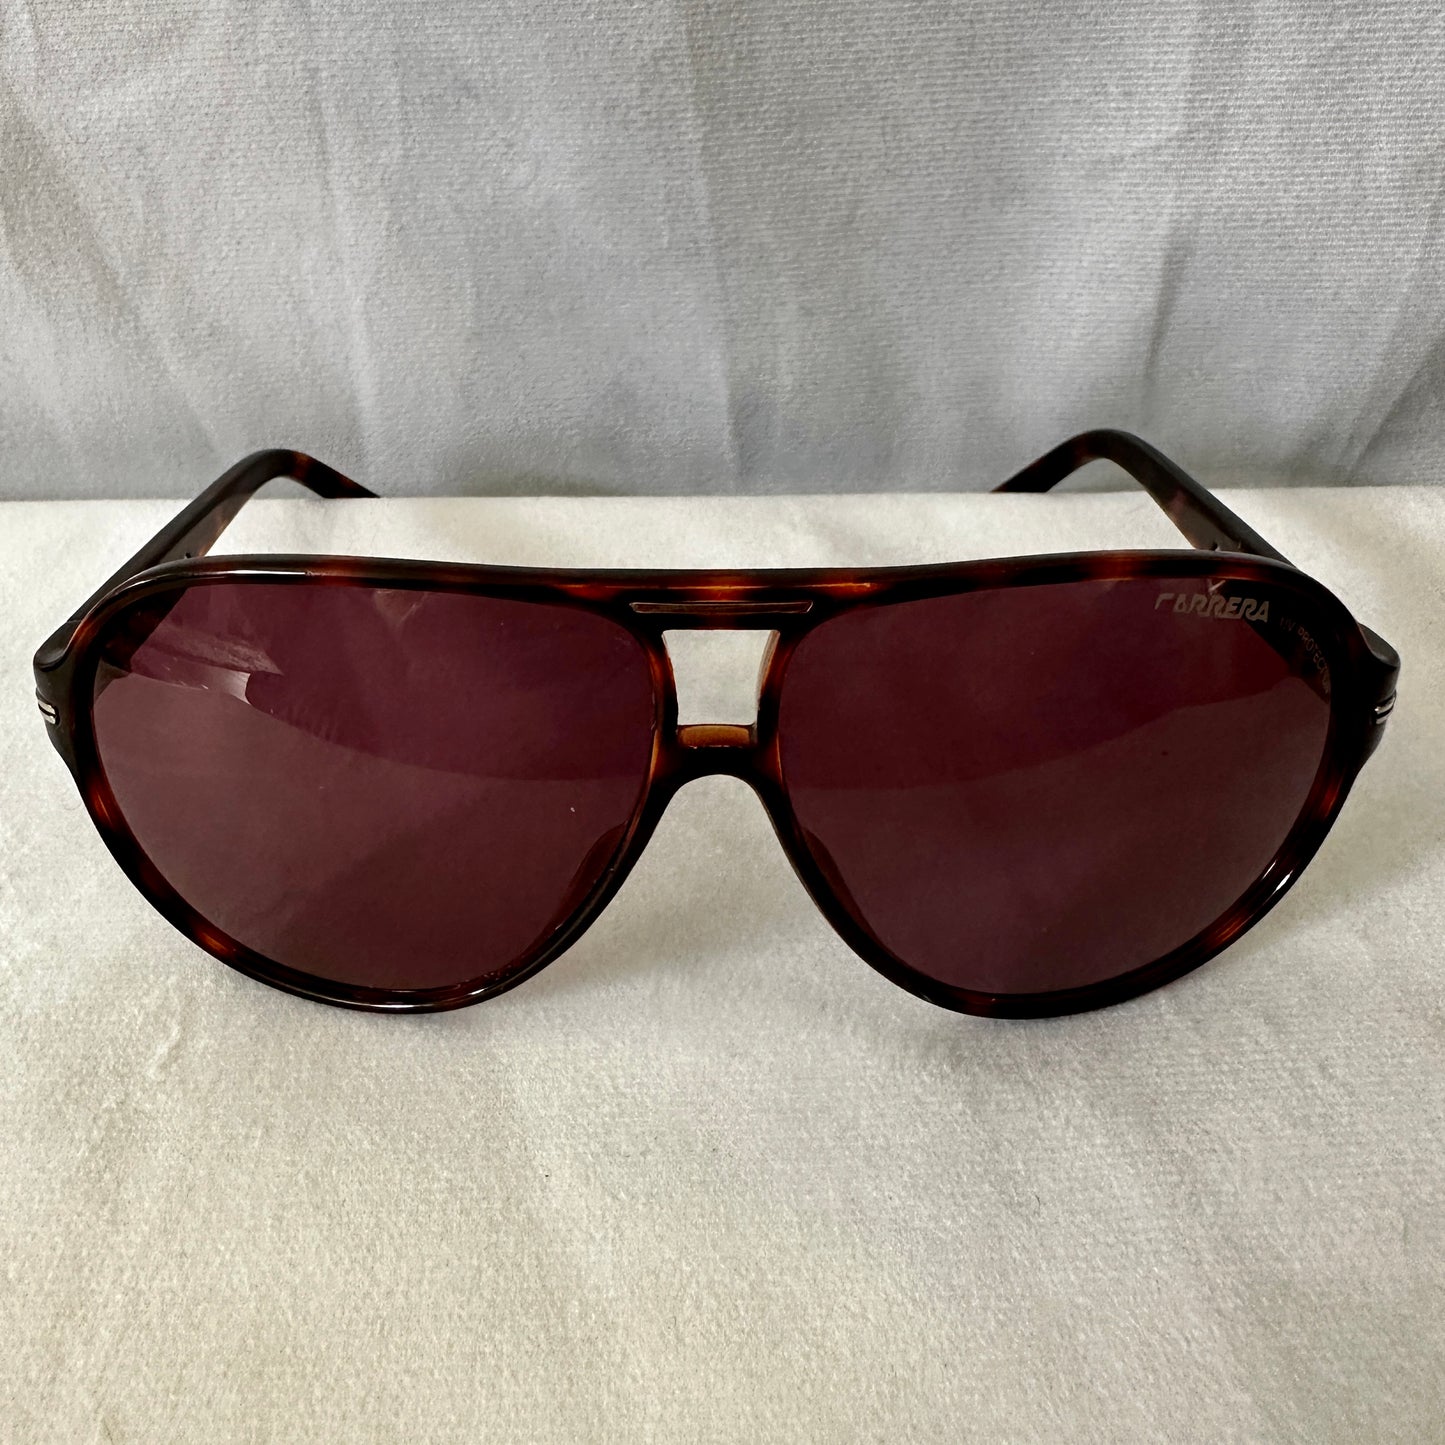 Carrera Vintage Sunglasses